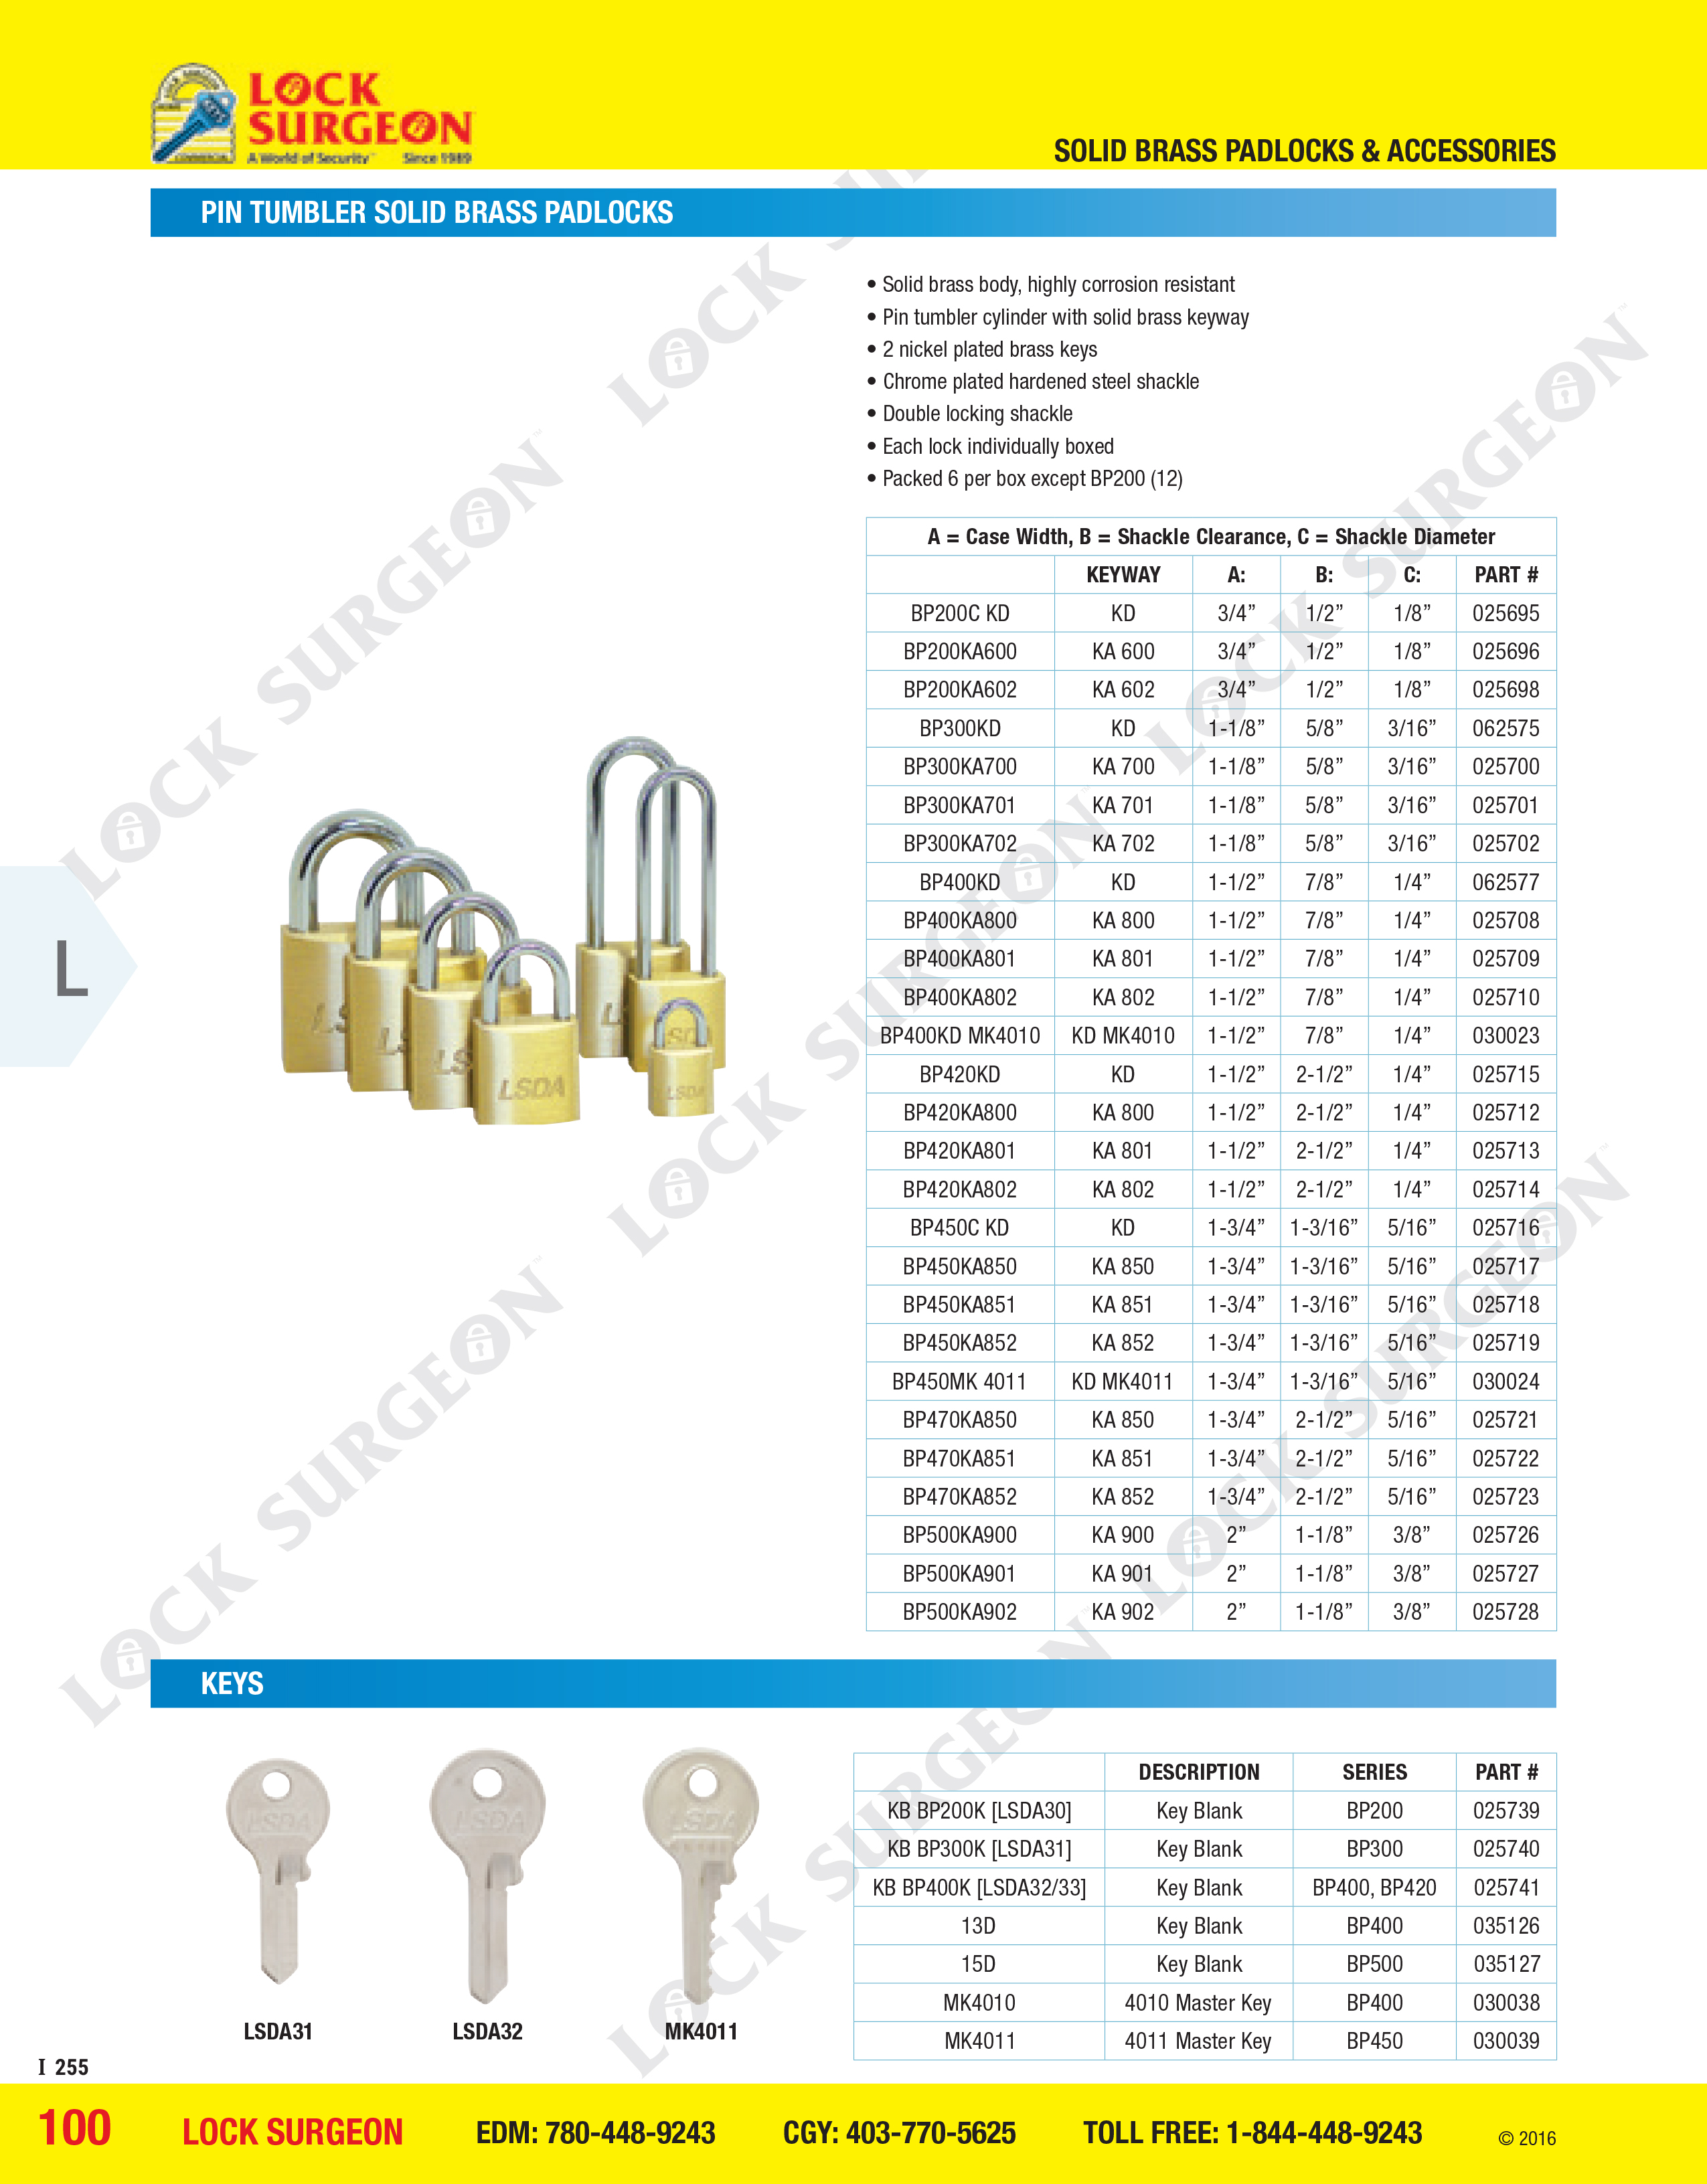 Pin tumbler solid brass padlocks and keys